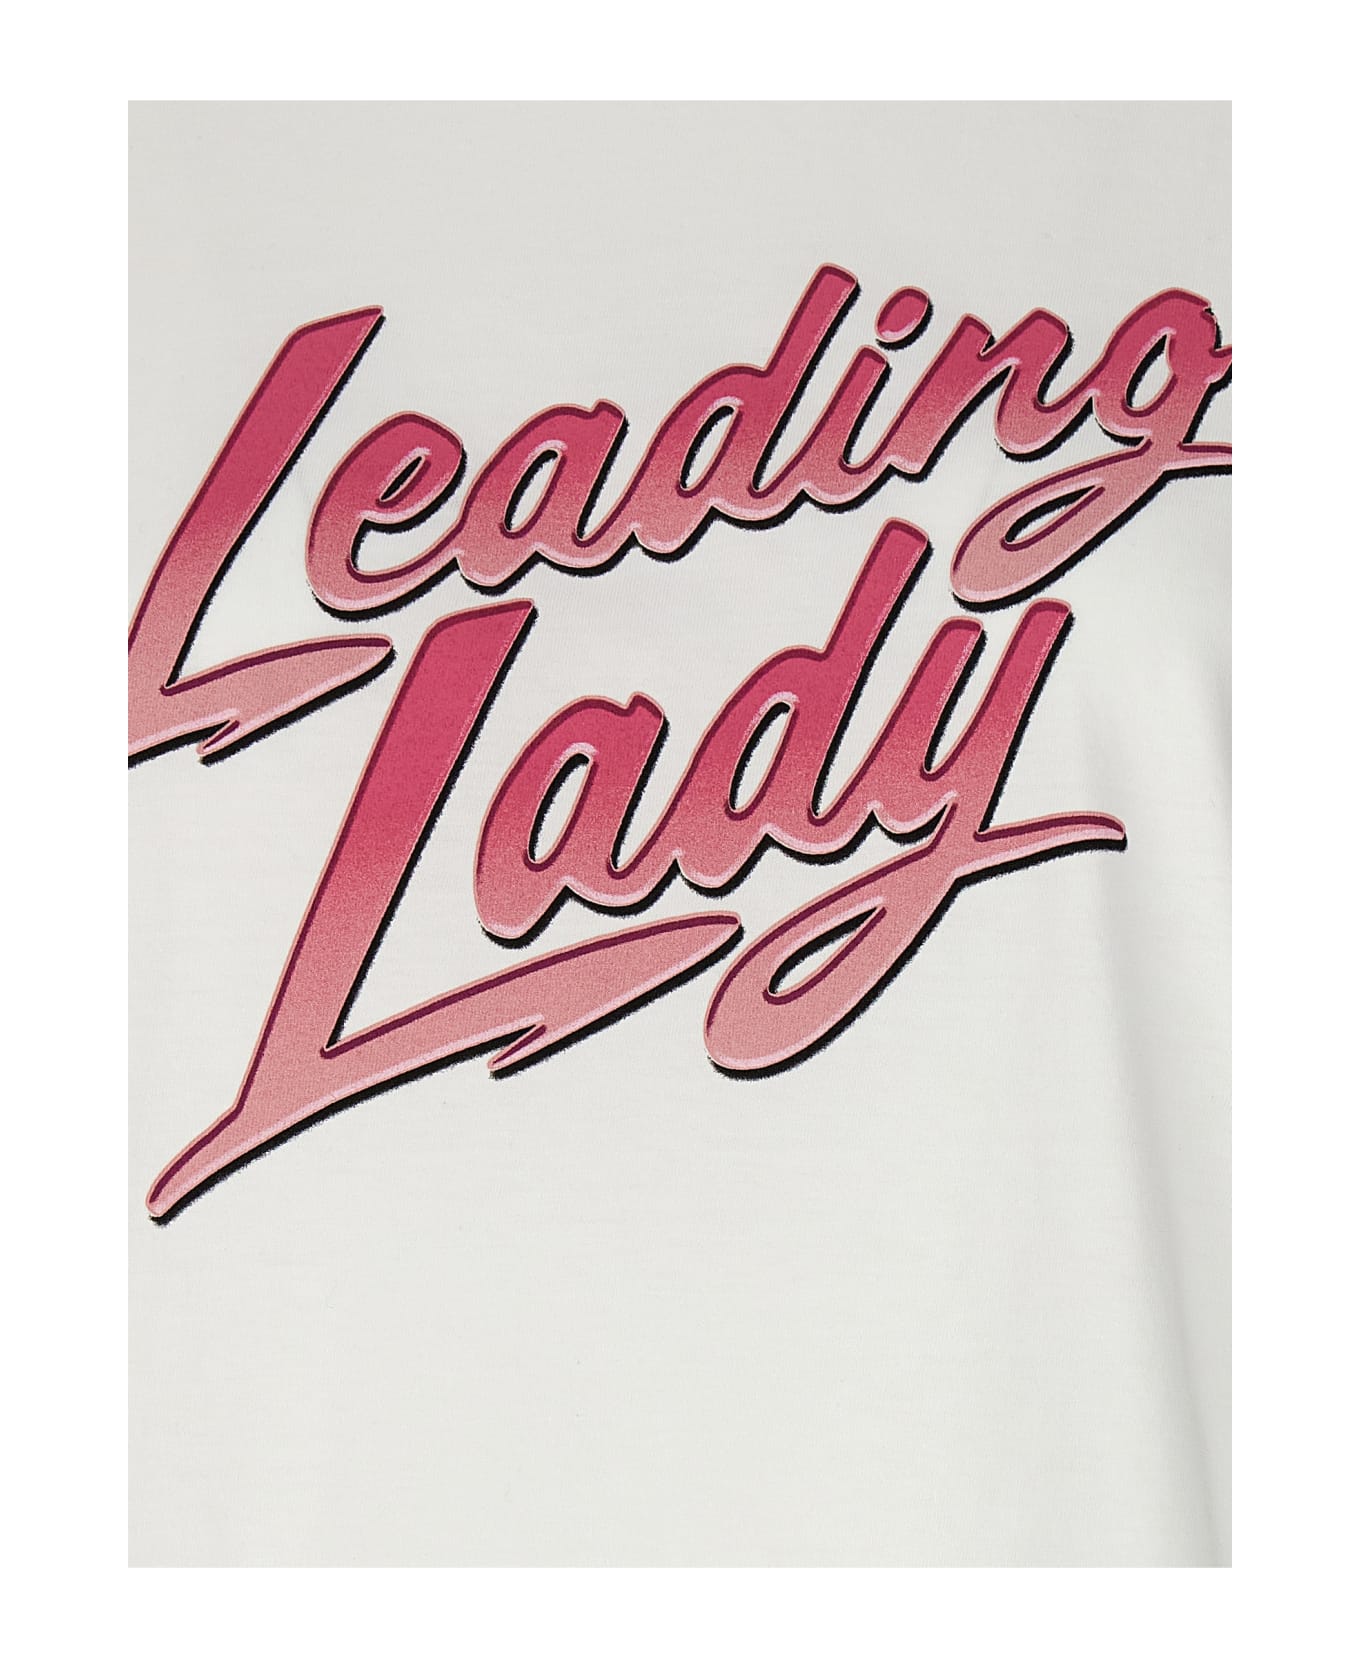 Dsquared2 Leading Lady T-shirt - White